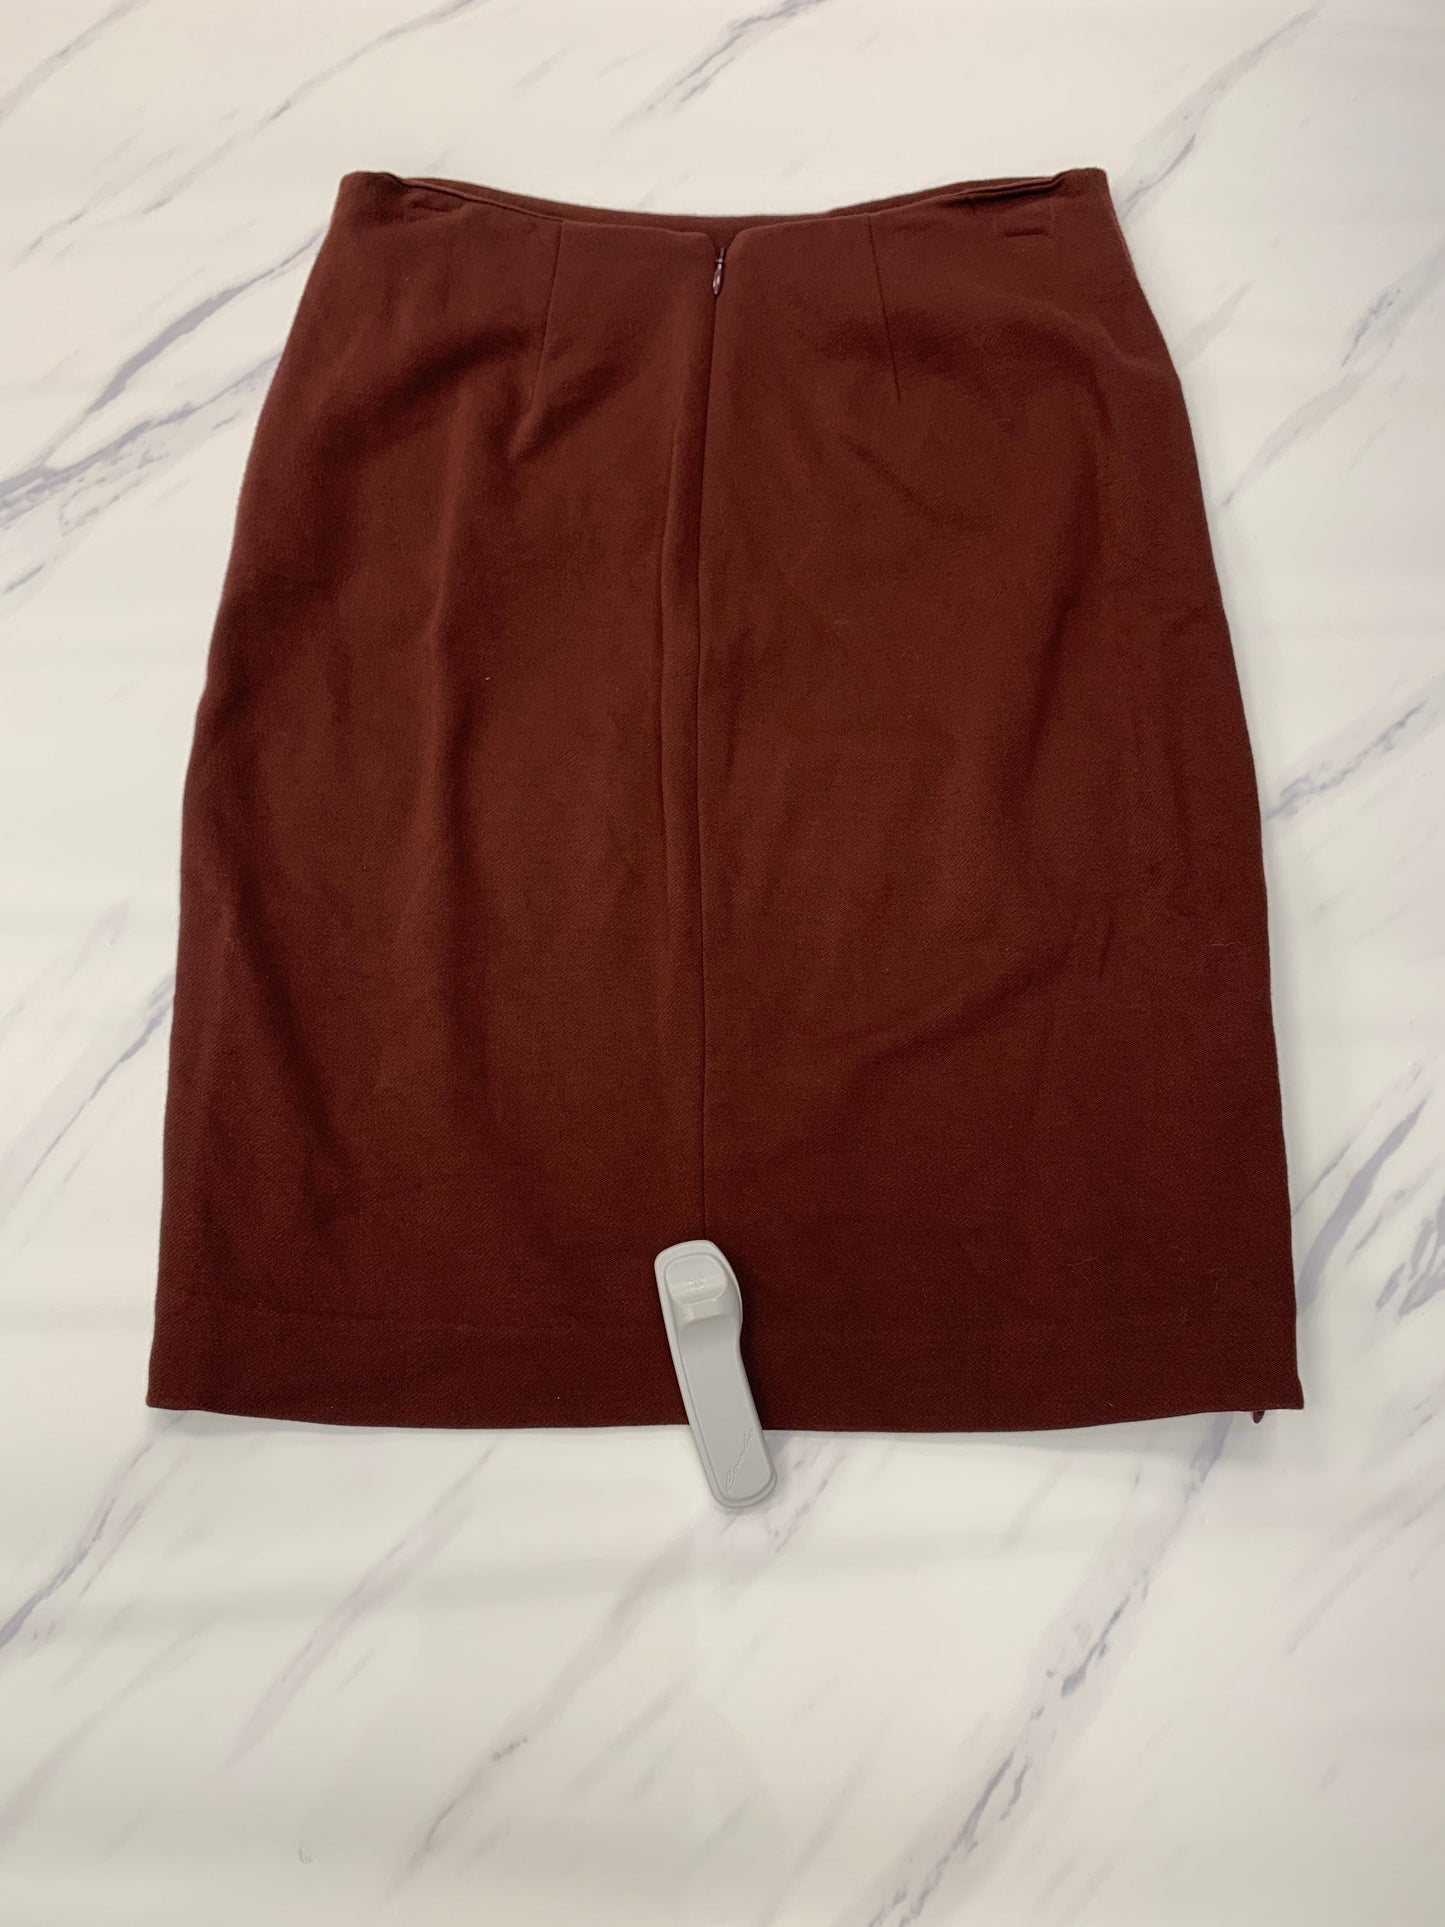 Skirt Mini & Short By Cabi  Size: 2